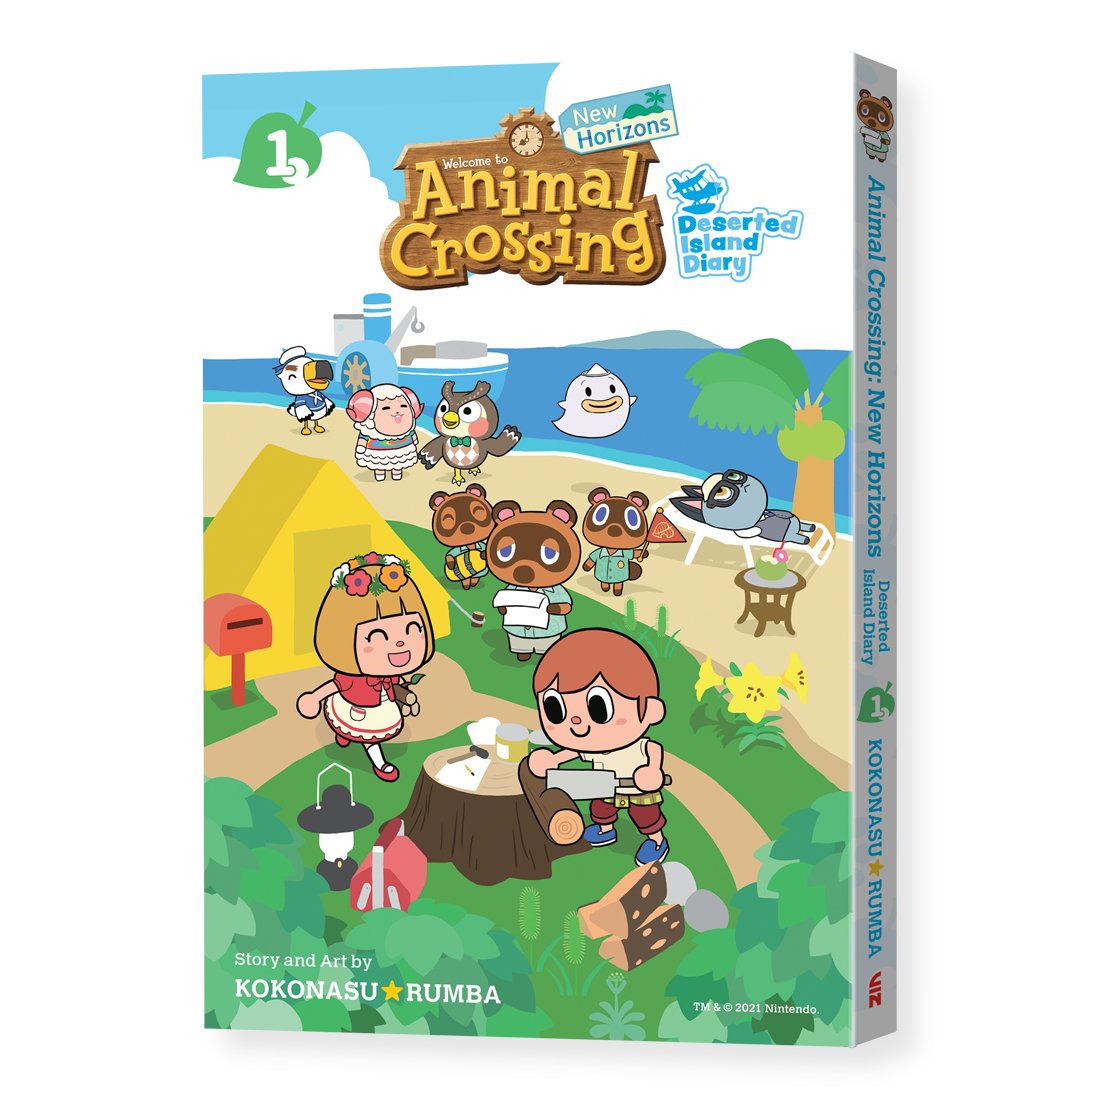 Animal Crossing: New Horizons, Vol. 1 Deserted Island Diary